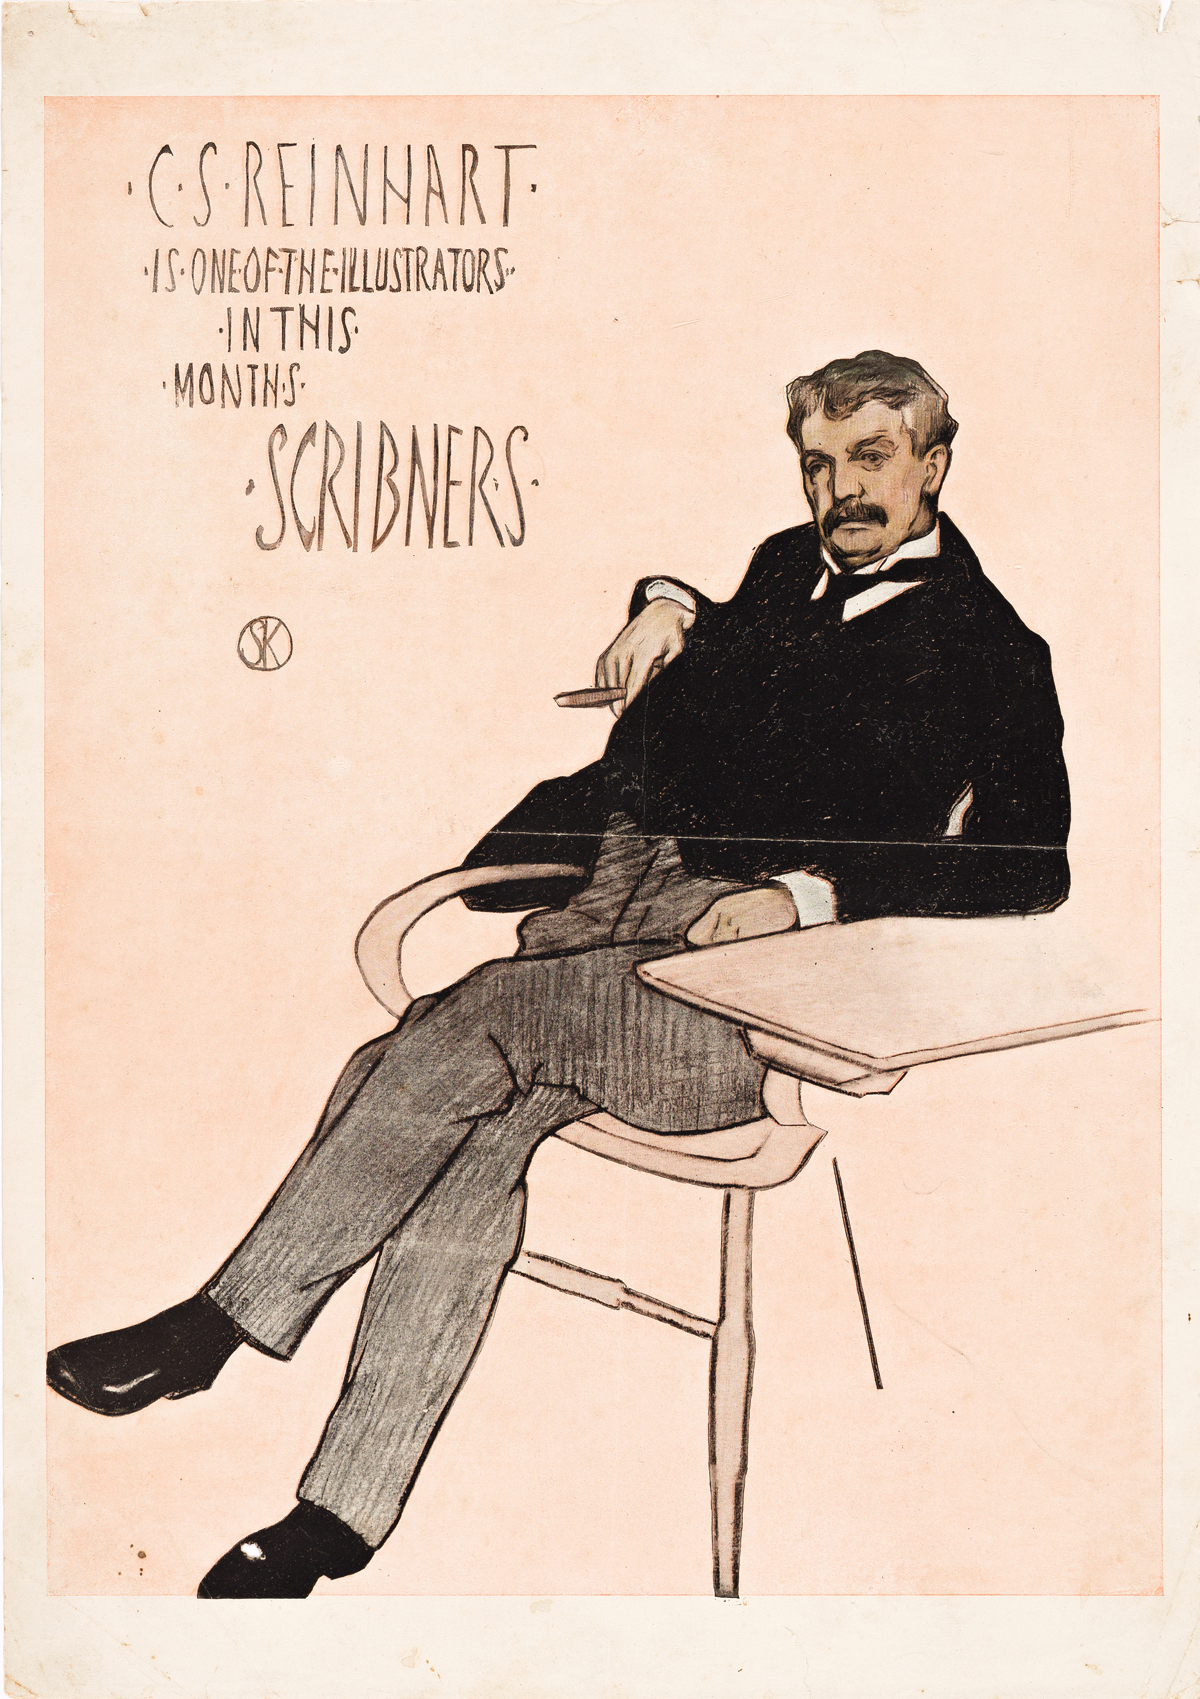 WILLIAM SERGEANT KENDALL (1869-1938).  SCRIBNERS / C.S. REINHART. 1895. 17x12 inches, 44x31 cm.